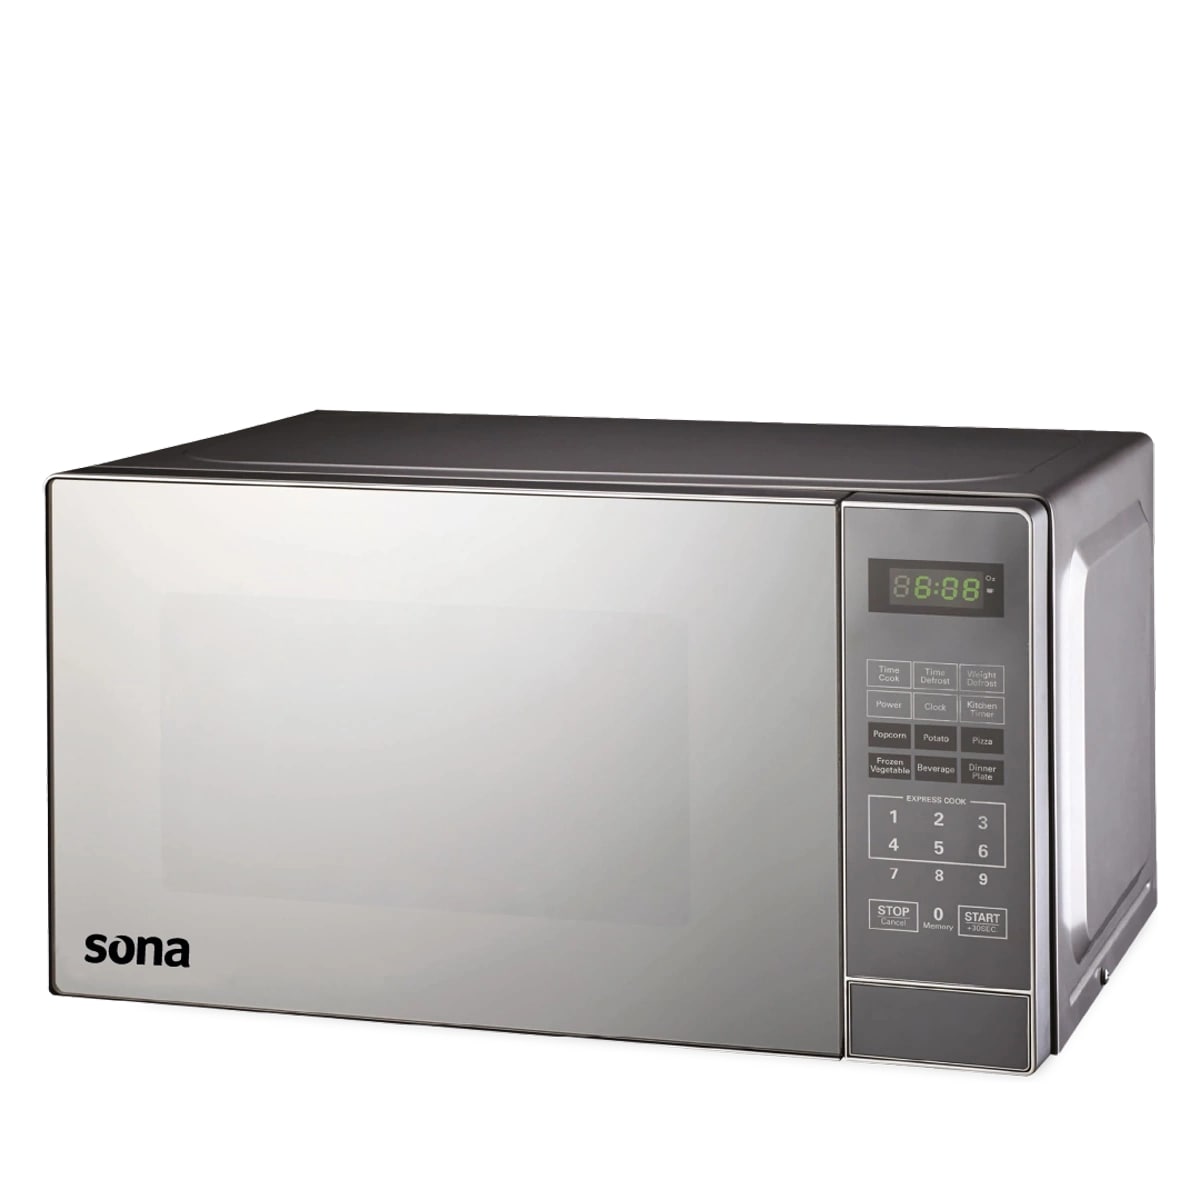 Sona Microwave 22 L Silver with mirror Glass 700W